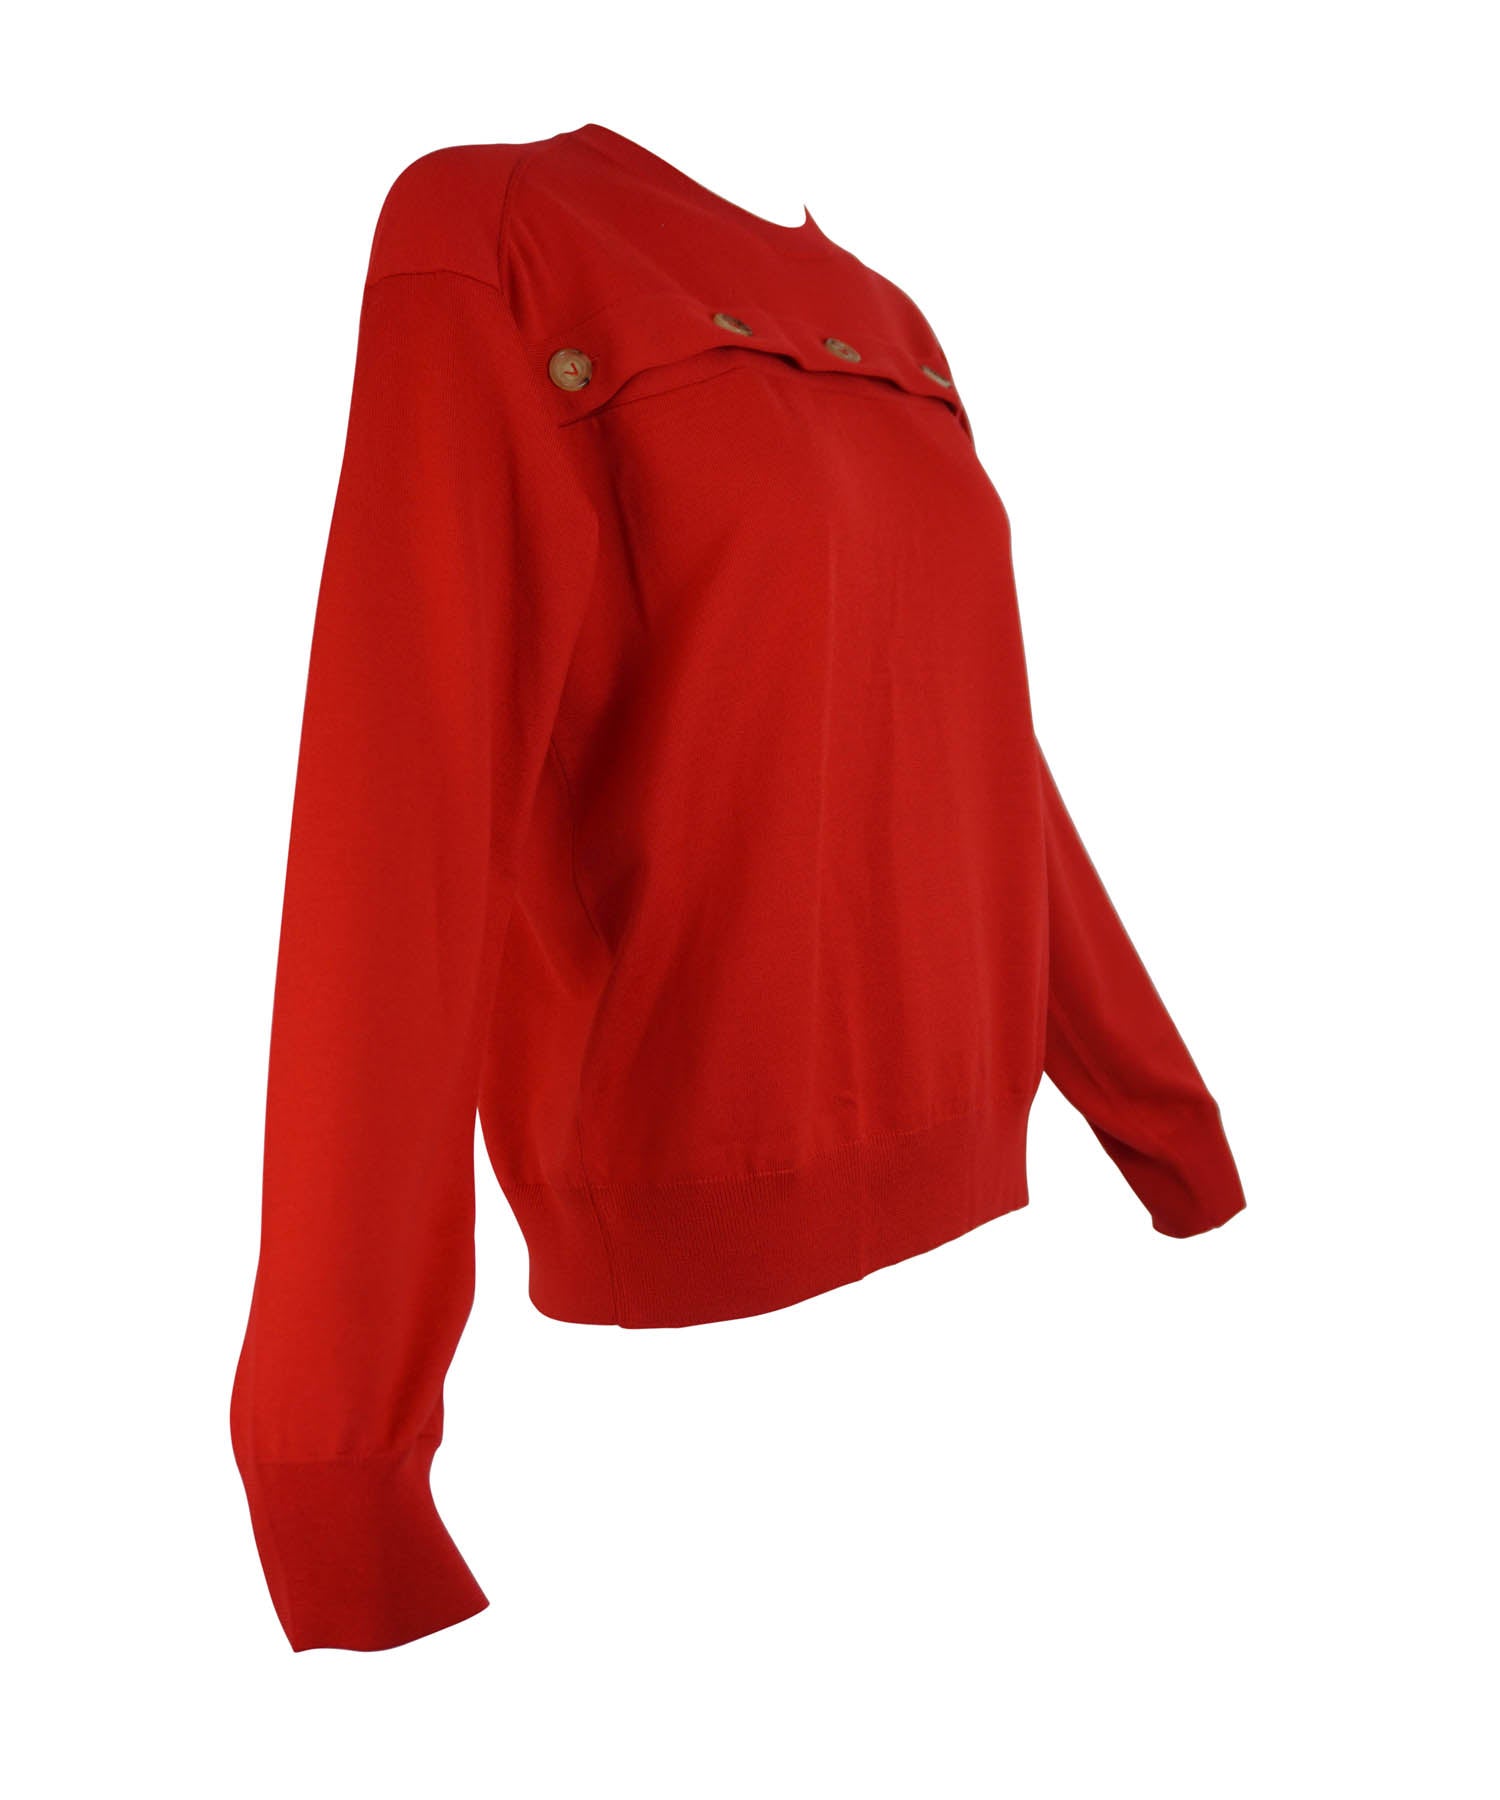 Bottega Veneta Nail Polish Red Sweater